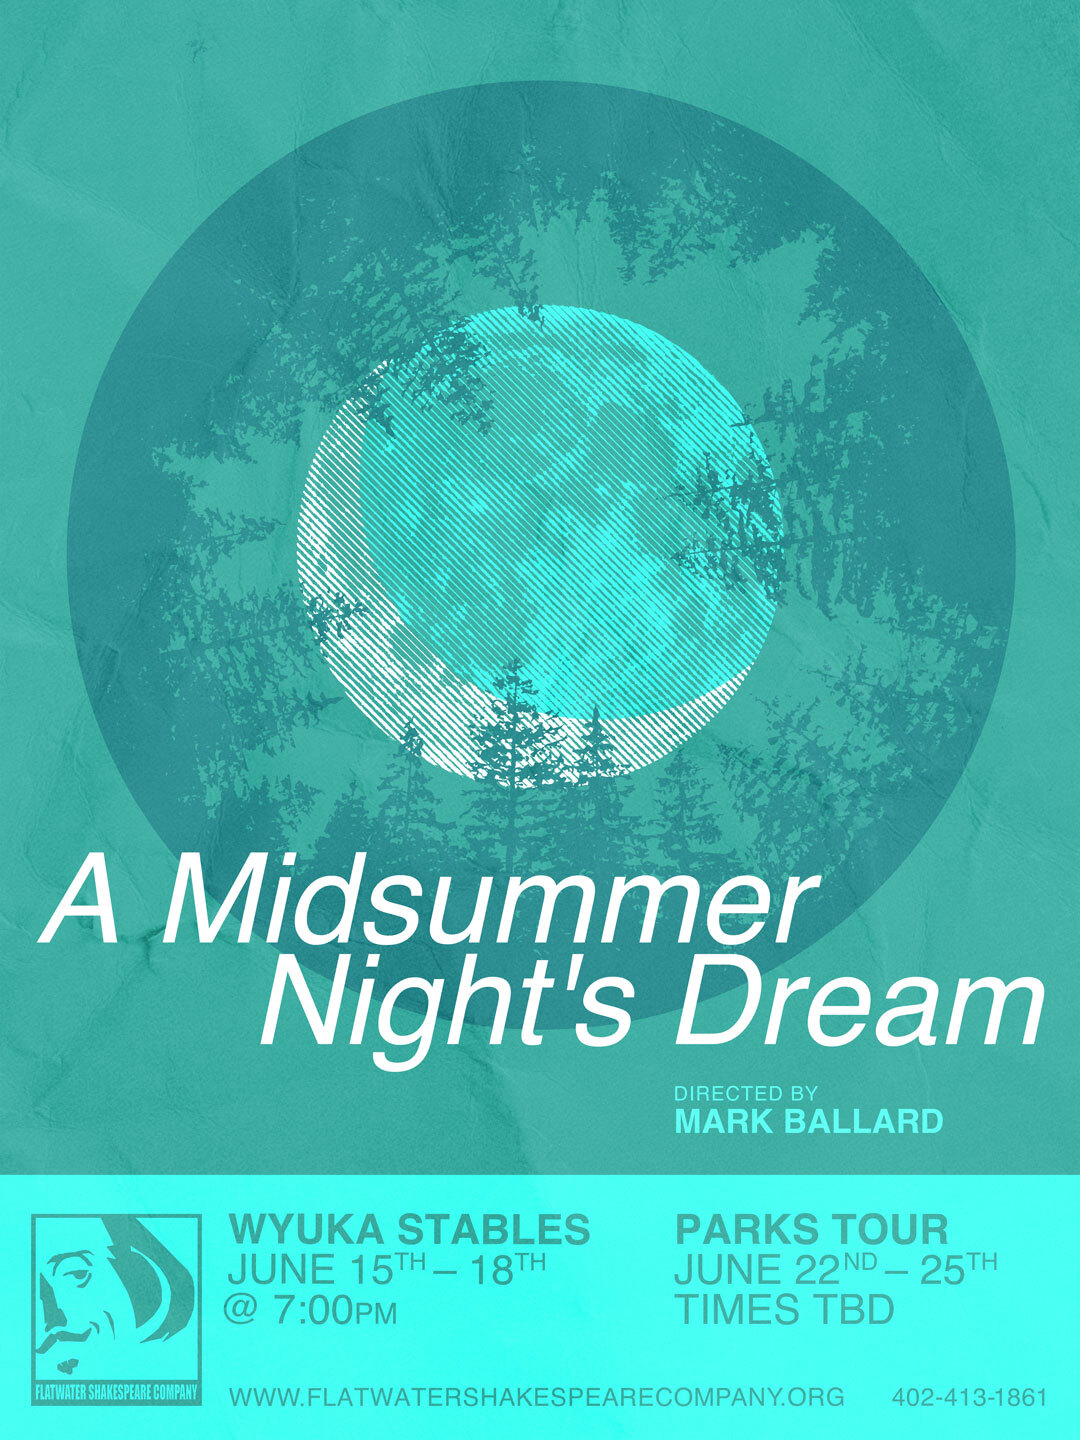 6/16 SEN - SENIOR (65+): Friday. June 16, 2023 | 7:00 p.m. - 9:00 p.m. CST | Wyuka Stables (A Midsummer Night's Dream)